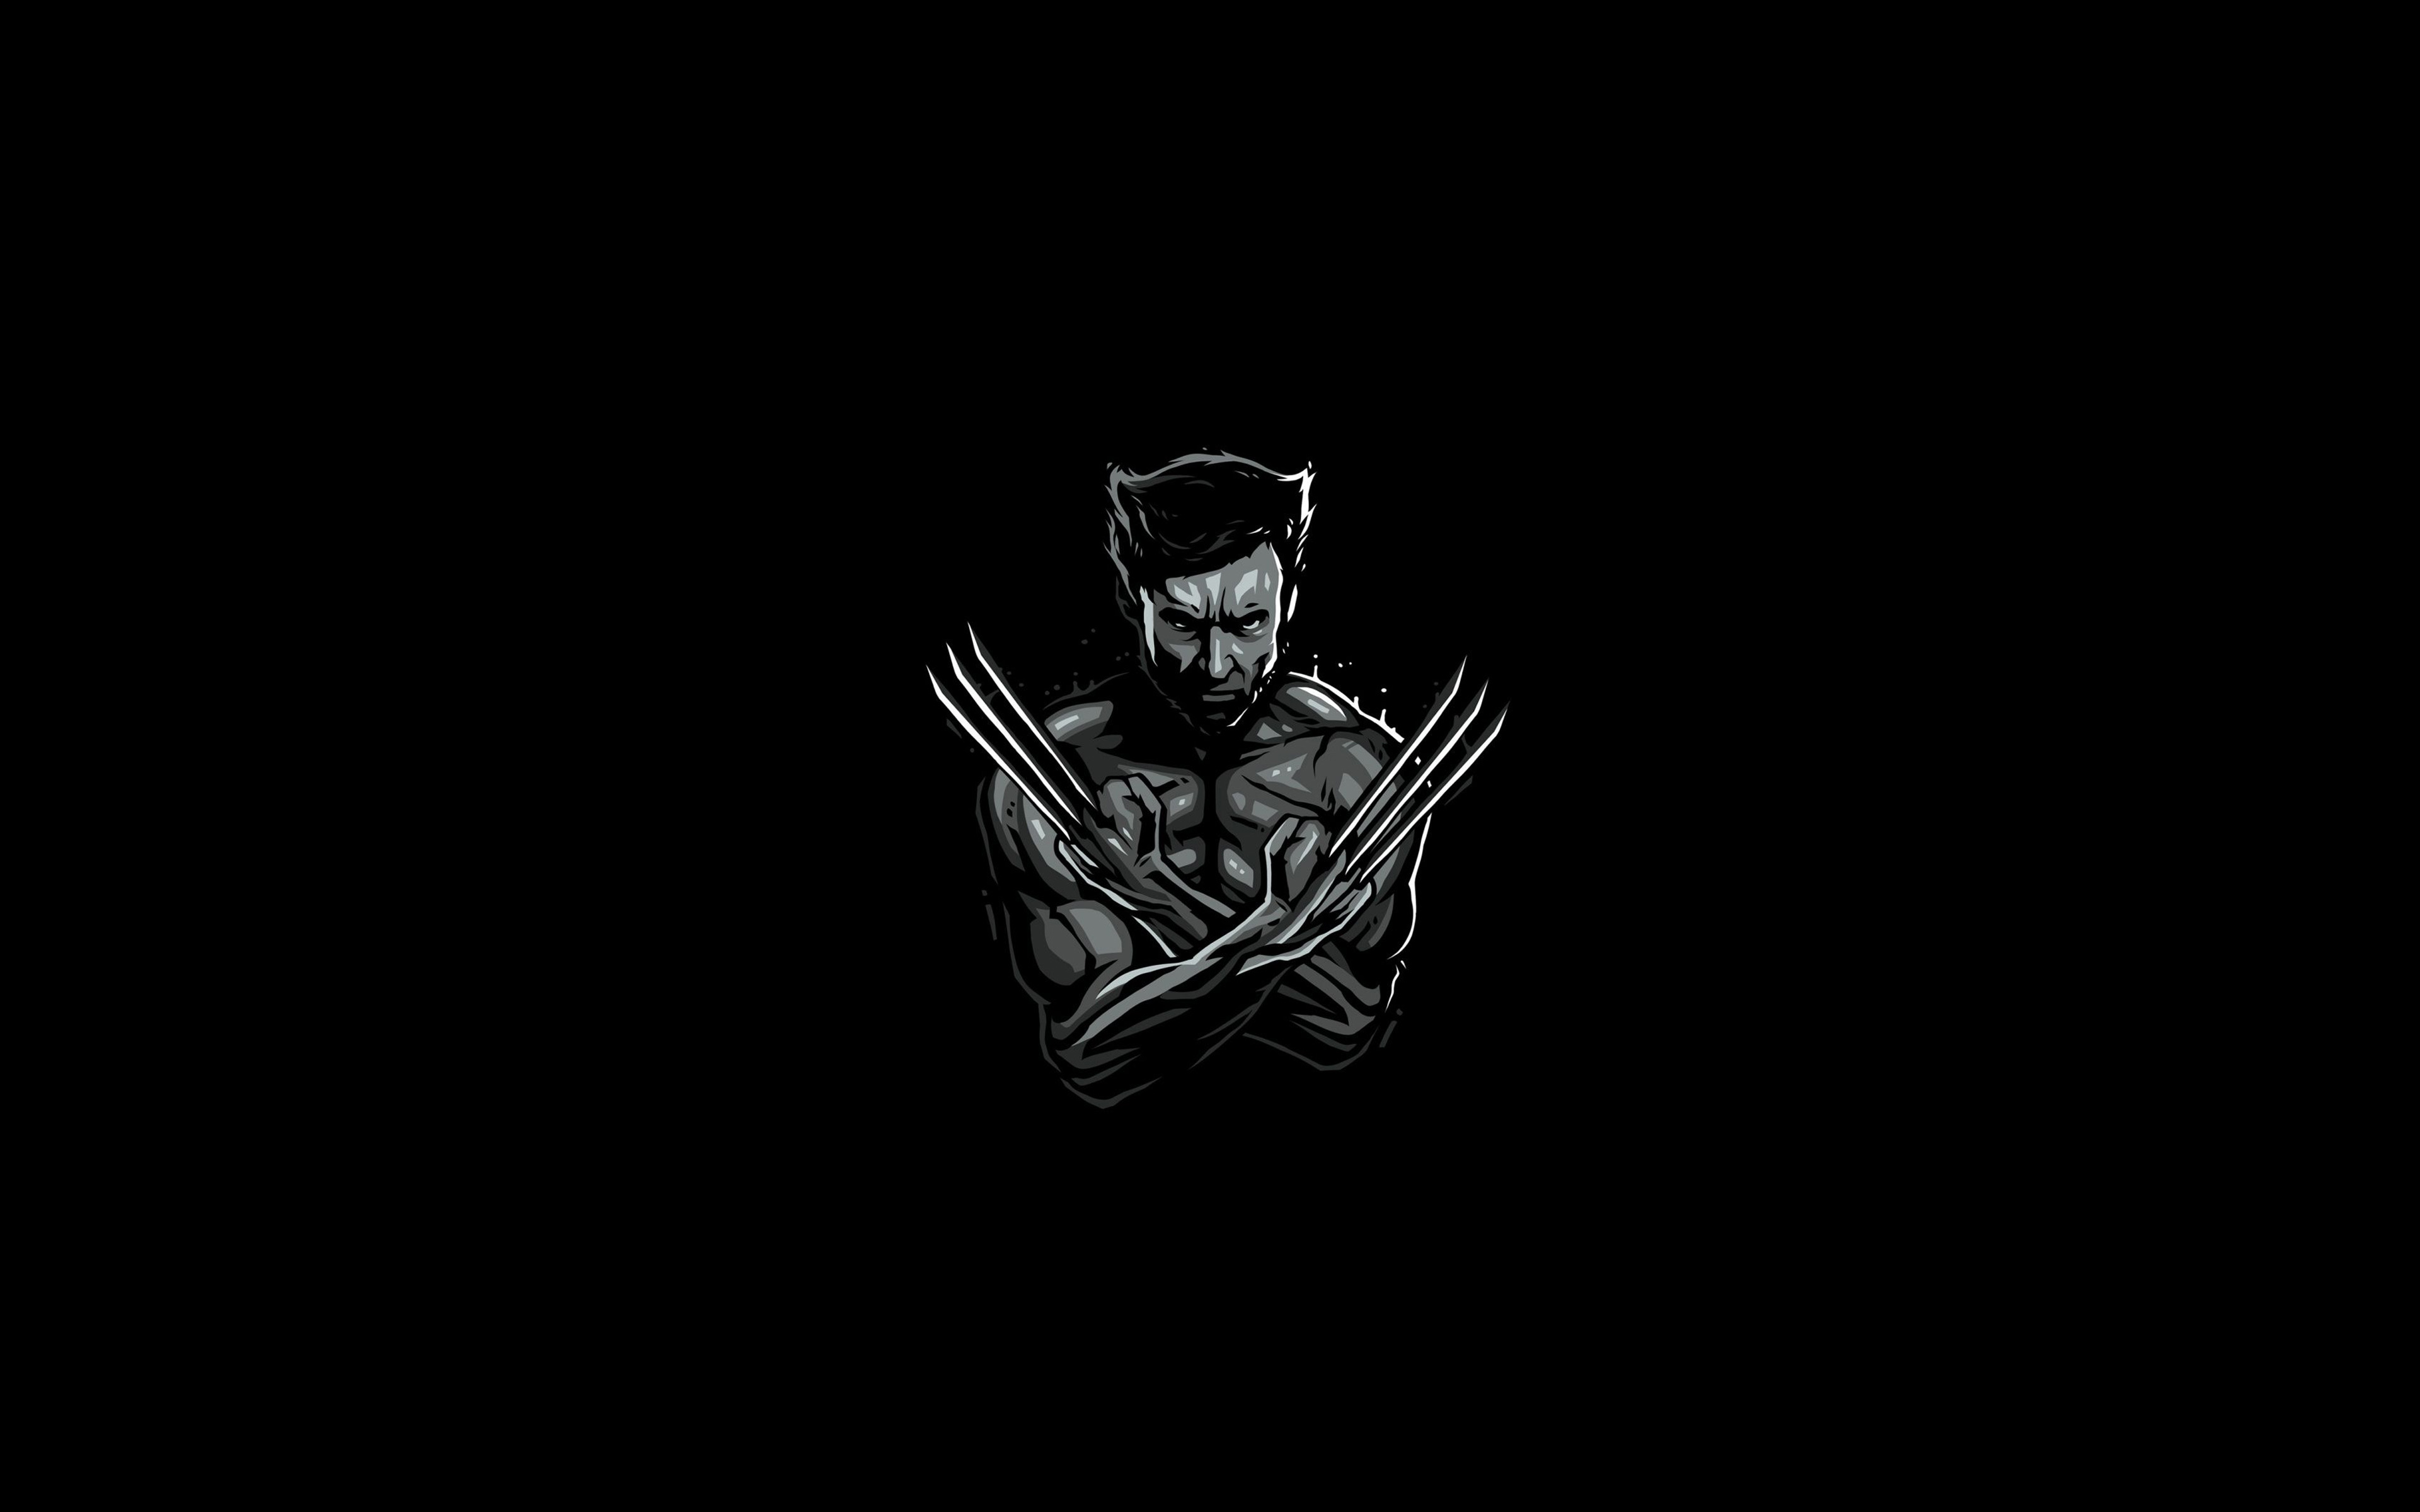 Download wallpaper Logan, minimal, 4k, superheroes, DC Comics, Wolverine, artwork, black background for desktop with resolution 3840x2400. High Quality HD picture wallpaper